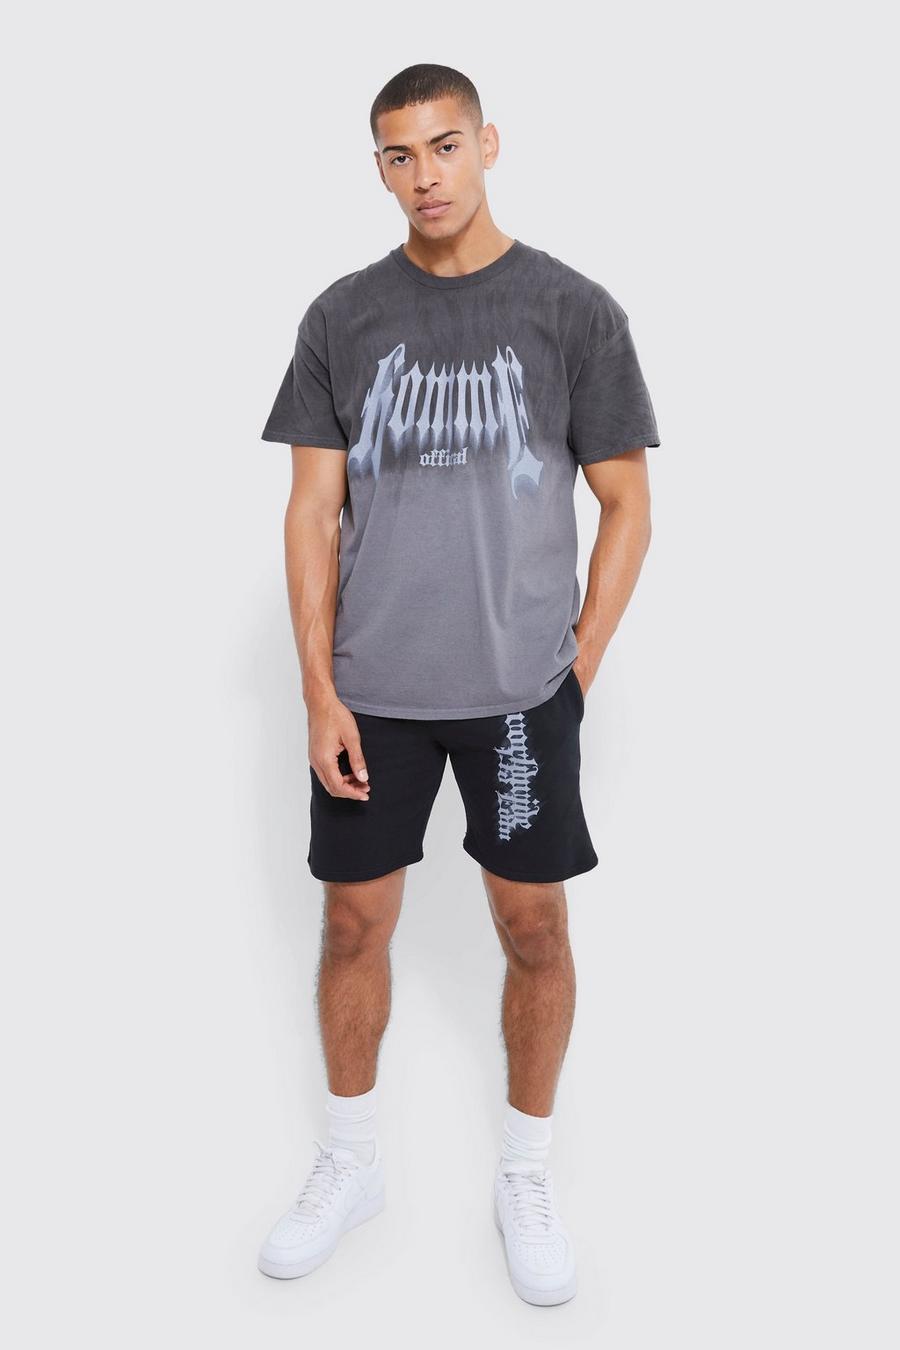 Charcoal grå Oversized Ombre Offcl Tie Dye T-shirt Set